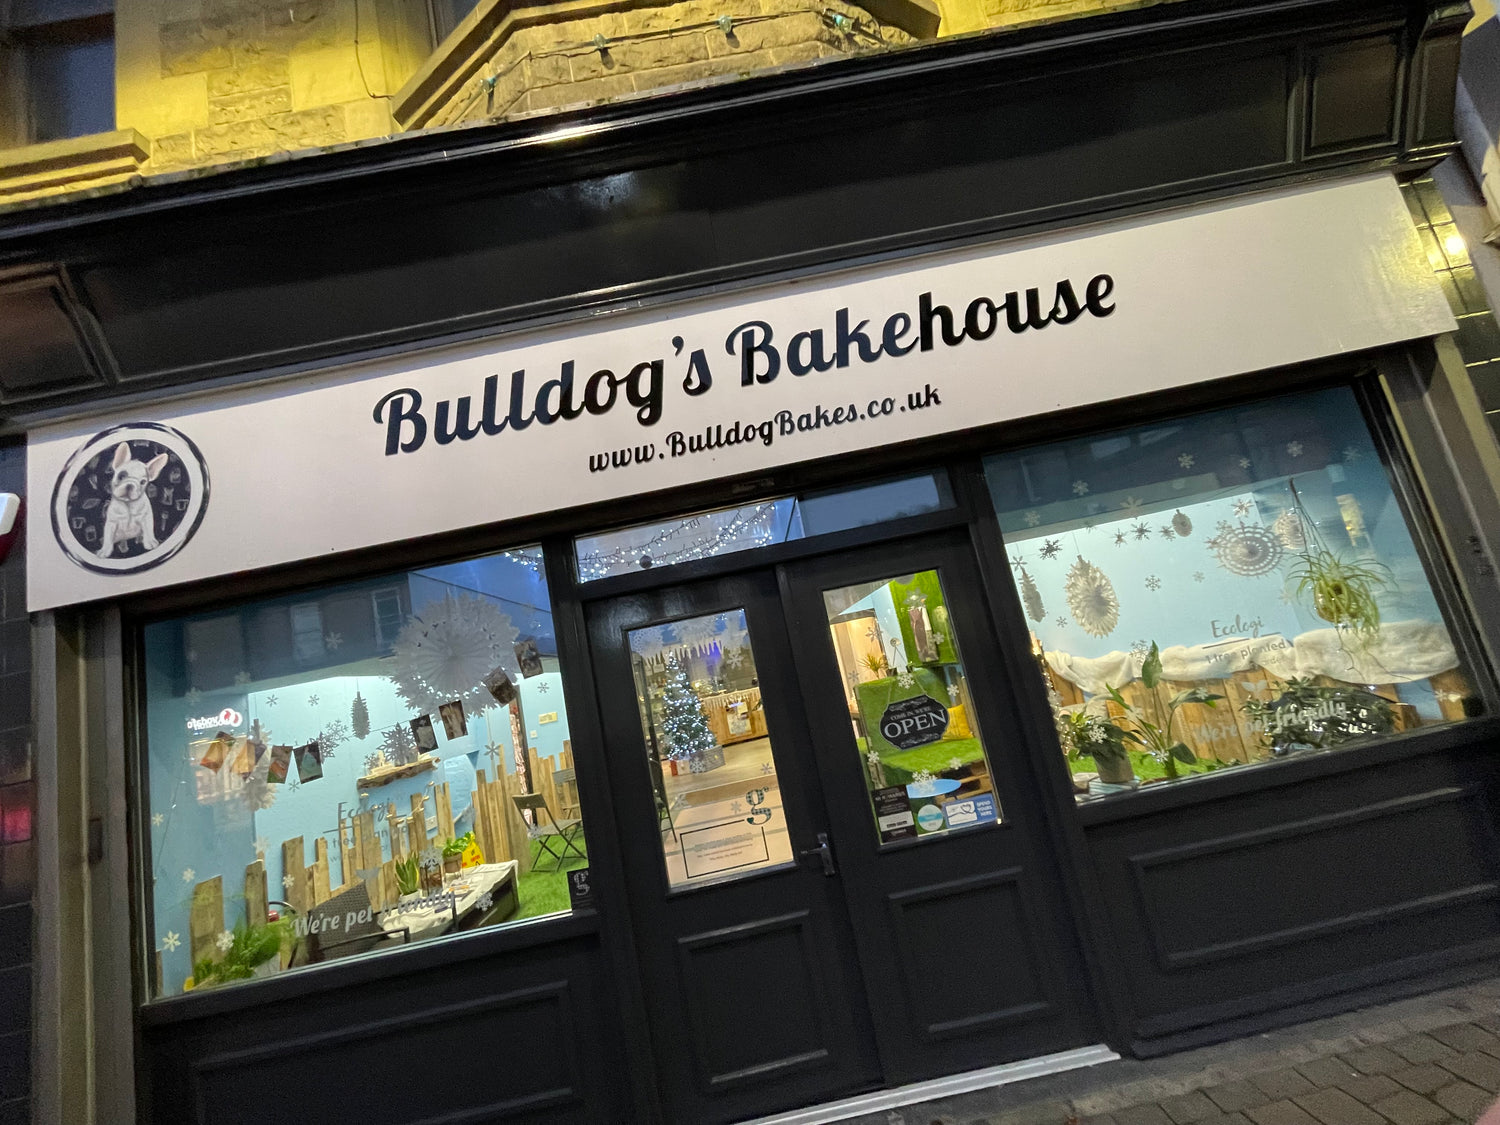 Image of Bulldog's Bakehouse shopfront